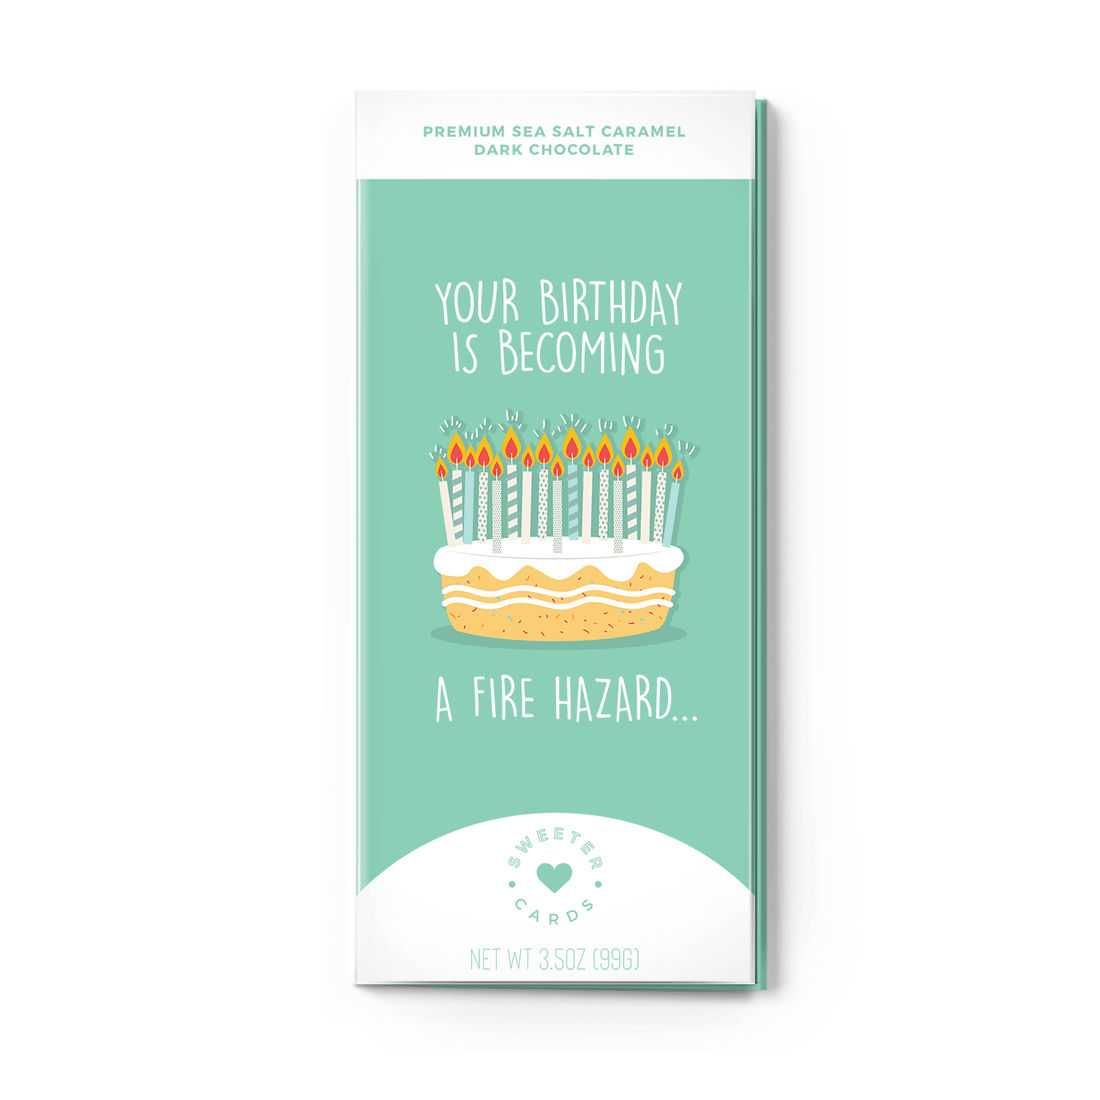 Happy Birthday Card with Chocolate Bar Inside - Giften Market